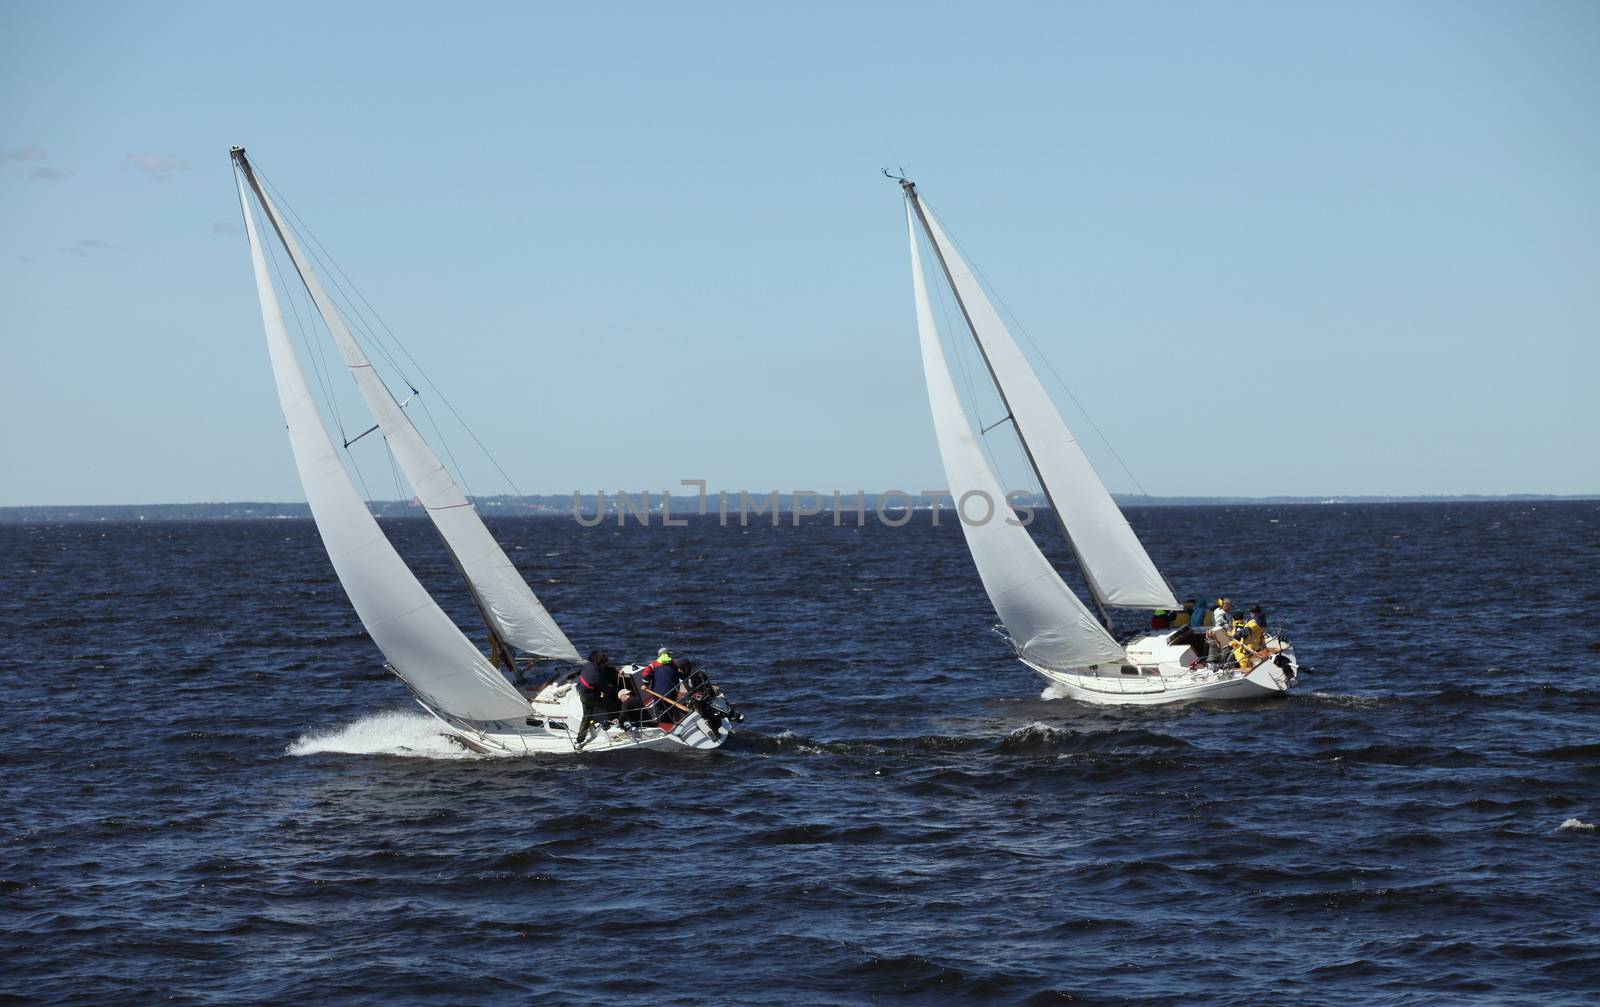 regatta sailing yachts by mrivserg